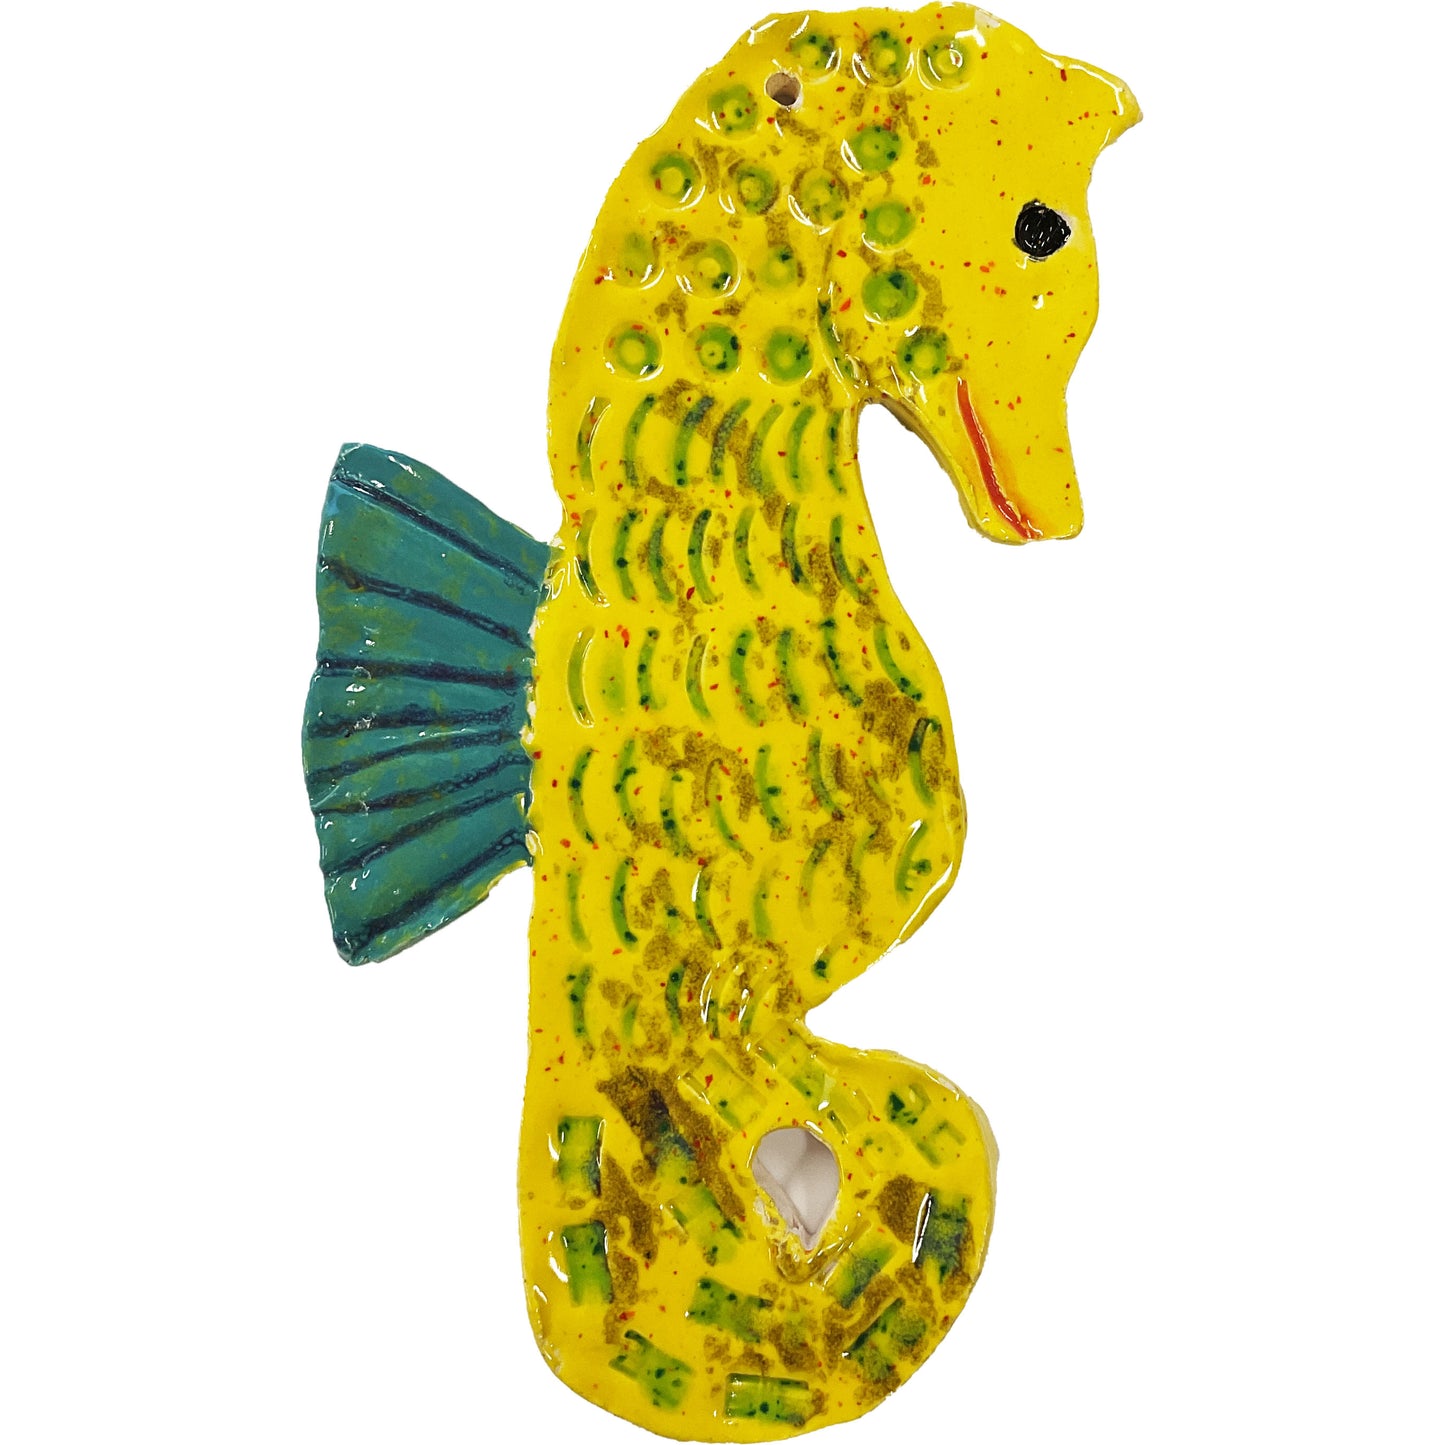 Ceramic Arts Handmade Clay Crafts Fresh Fish Glazed 7.5-inch x 4-inch Seahorse made by Cassandra Richardson